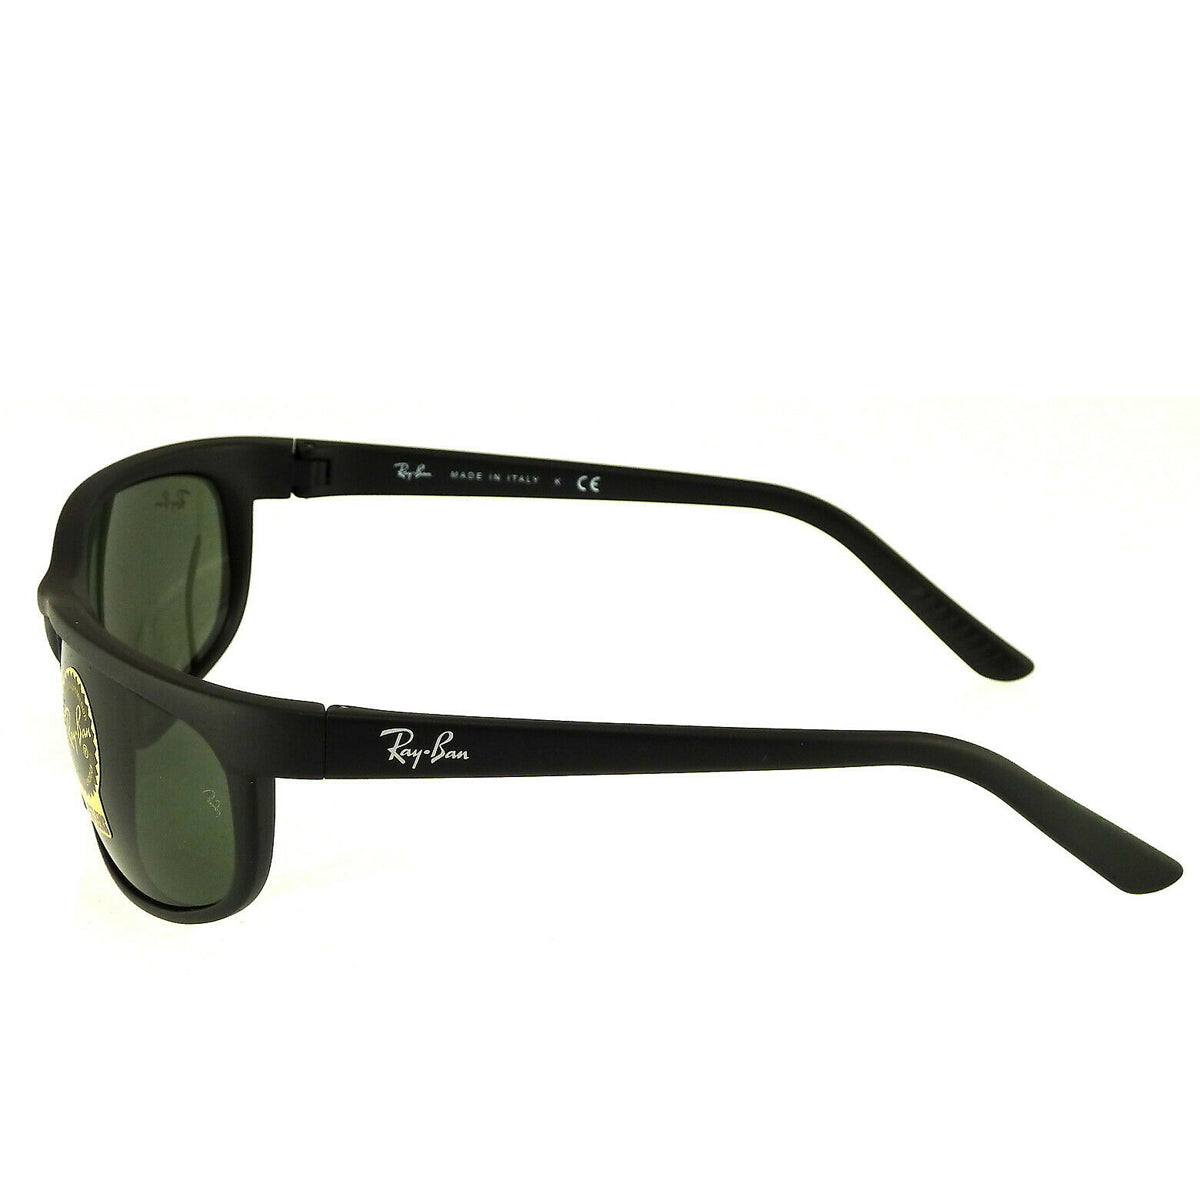 Discover more than 213 ray ban predator sunglasses super hot